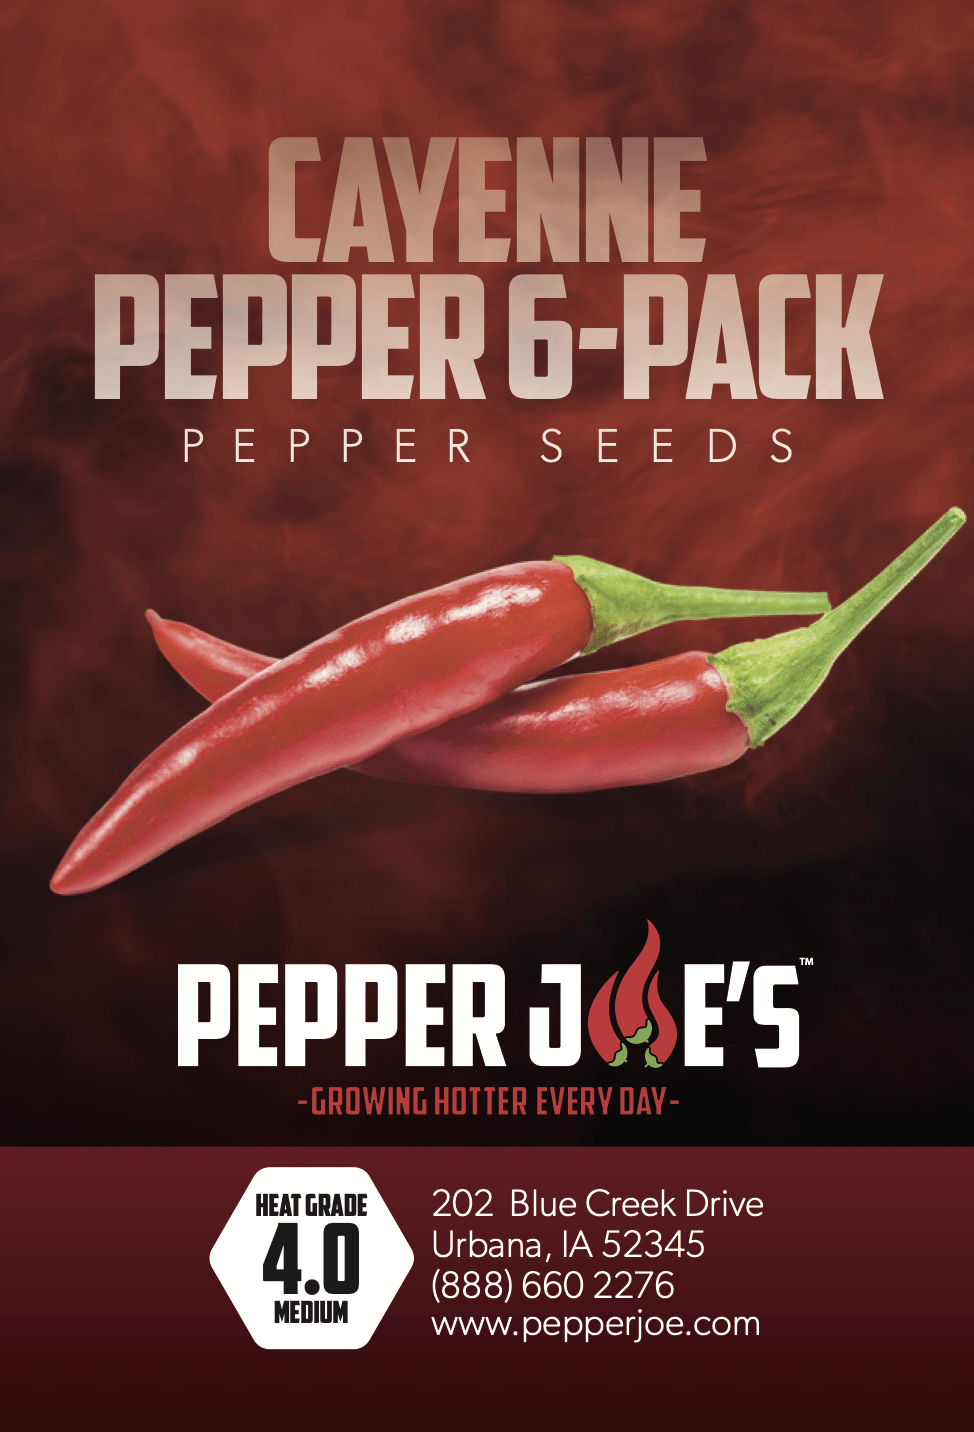 Pepper Joe's Cayenne pepper pack - seed label